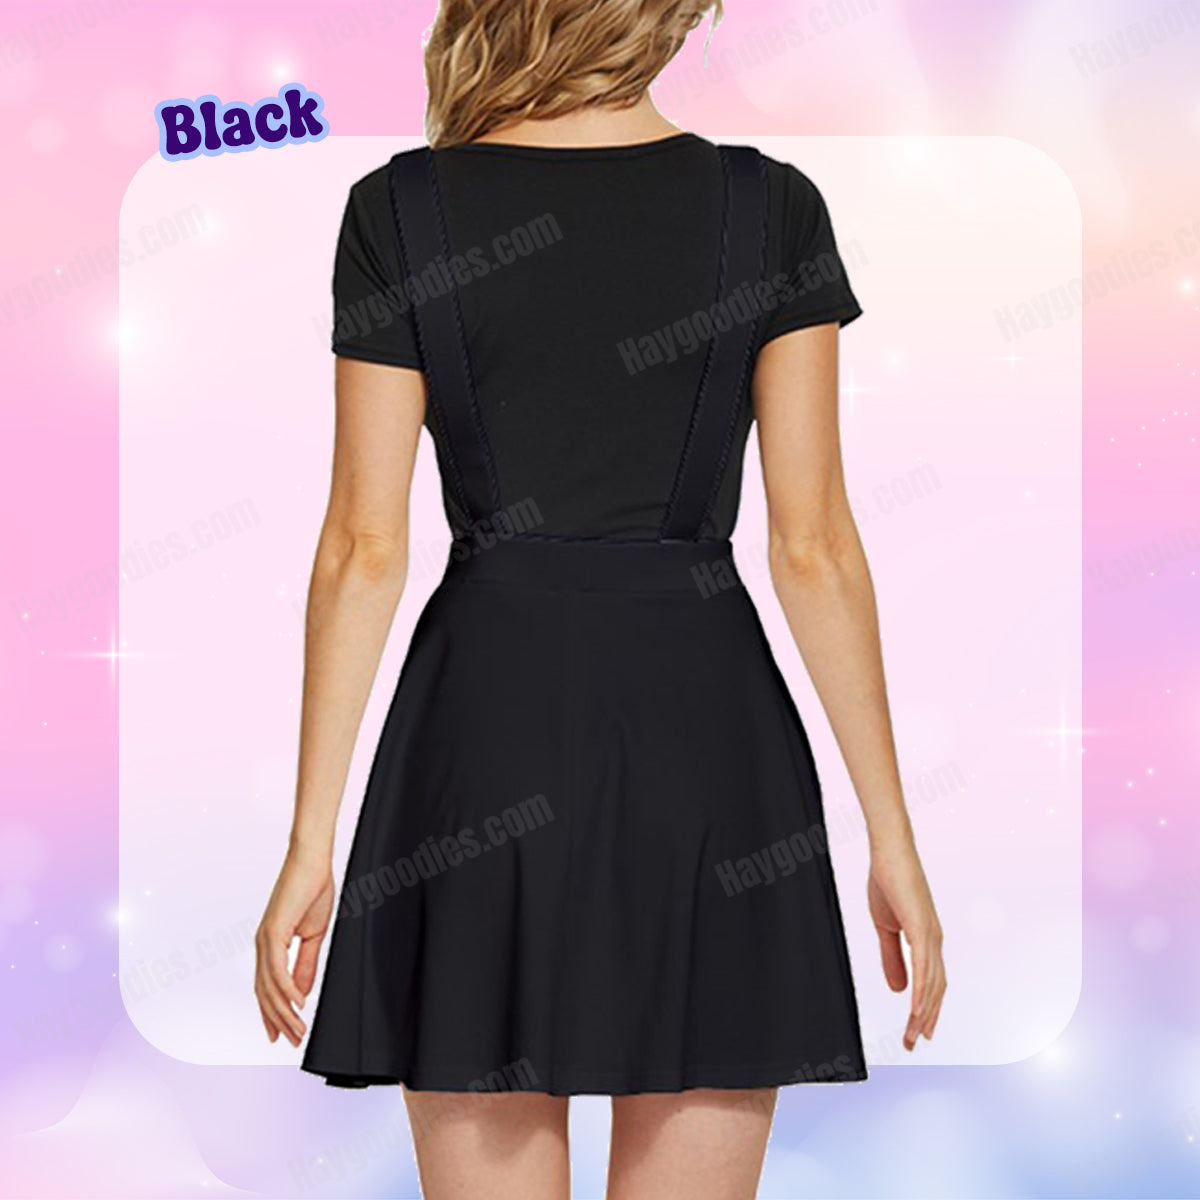 Black Overalls Dress-XS to 5XL